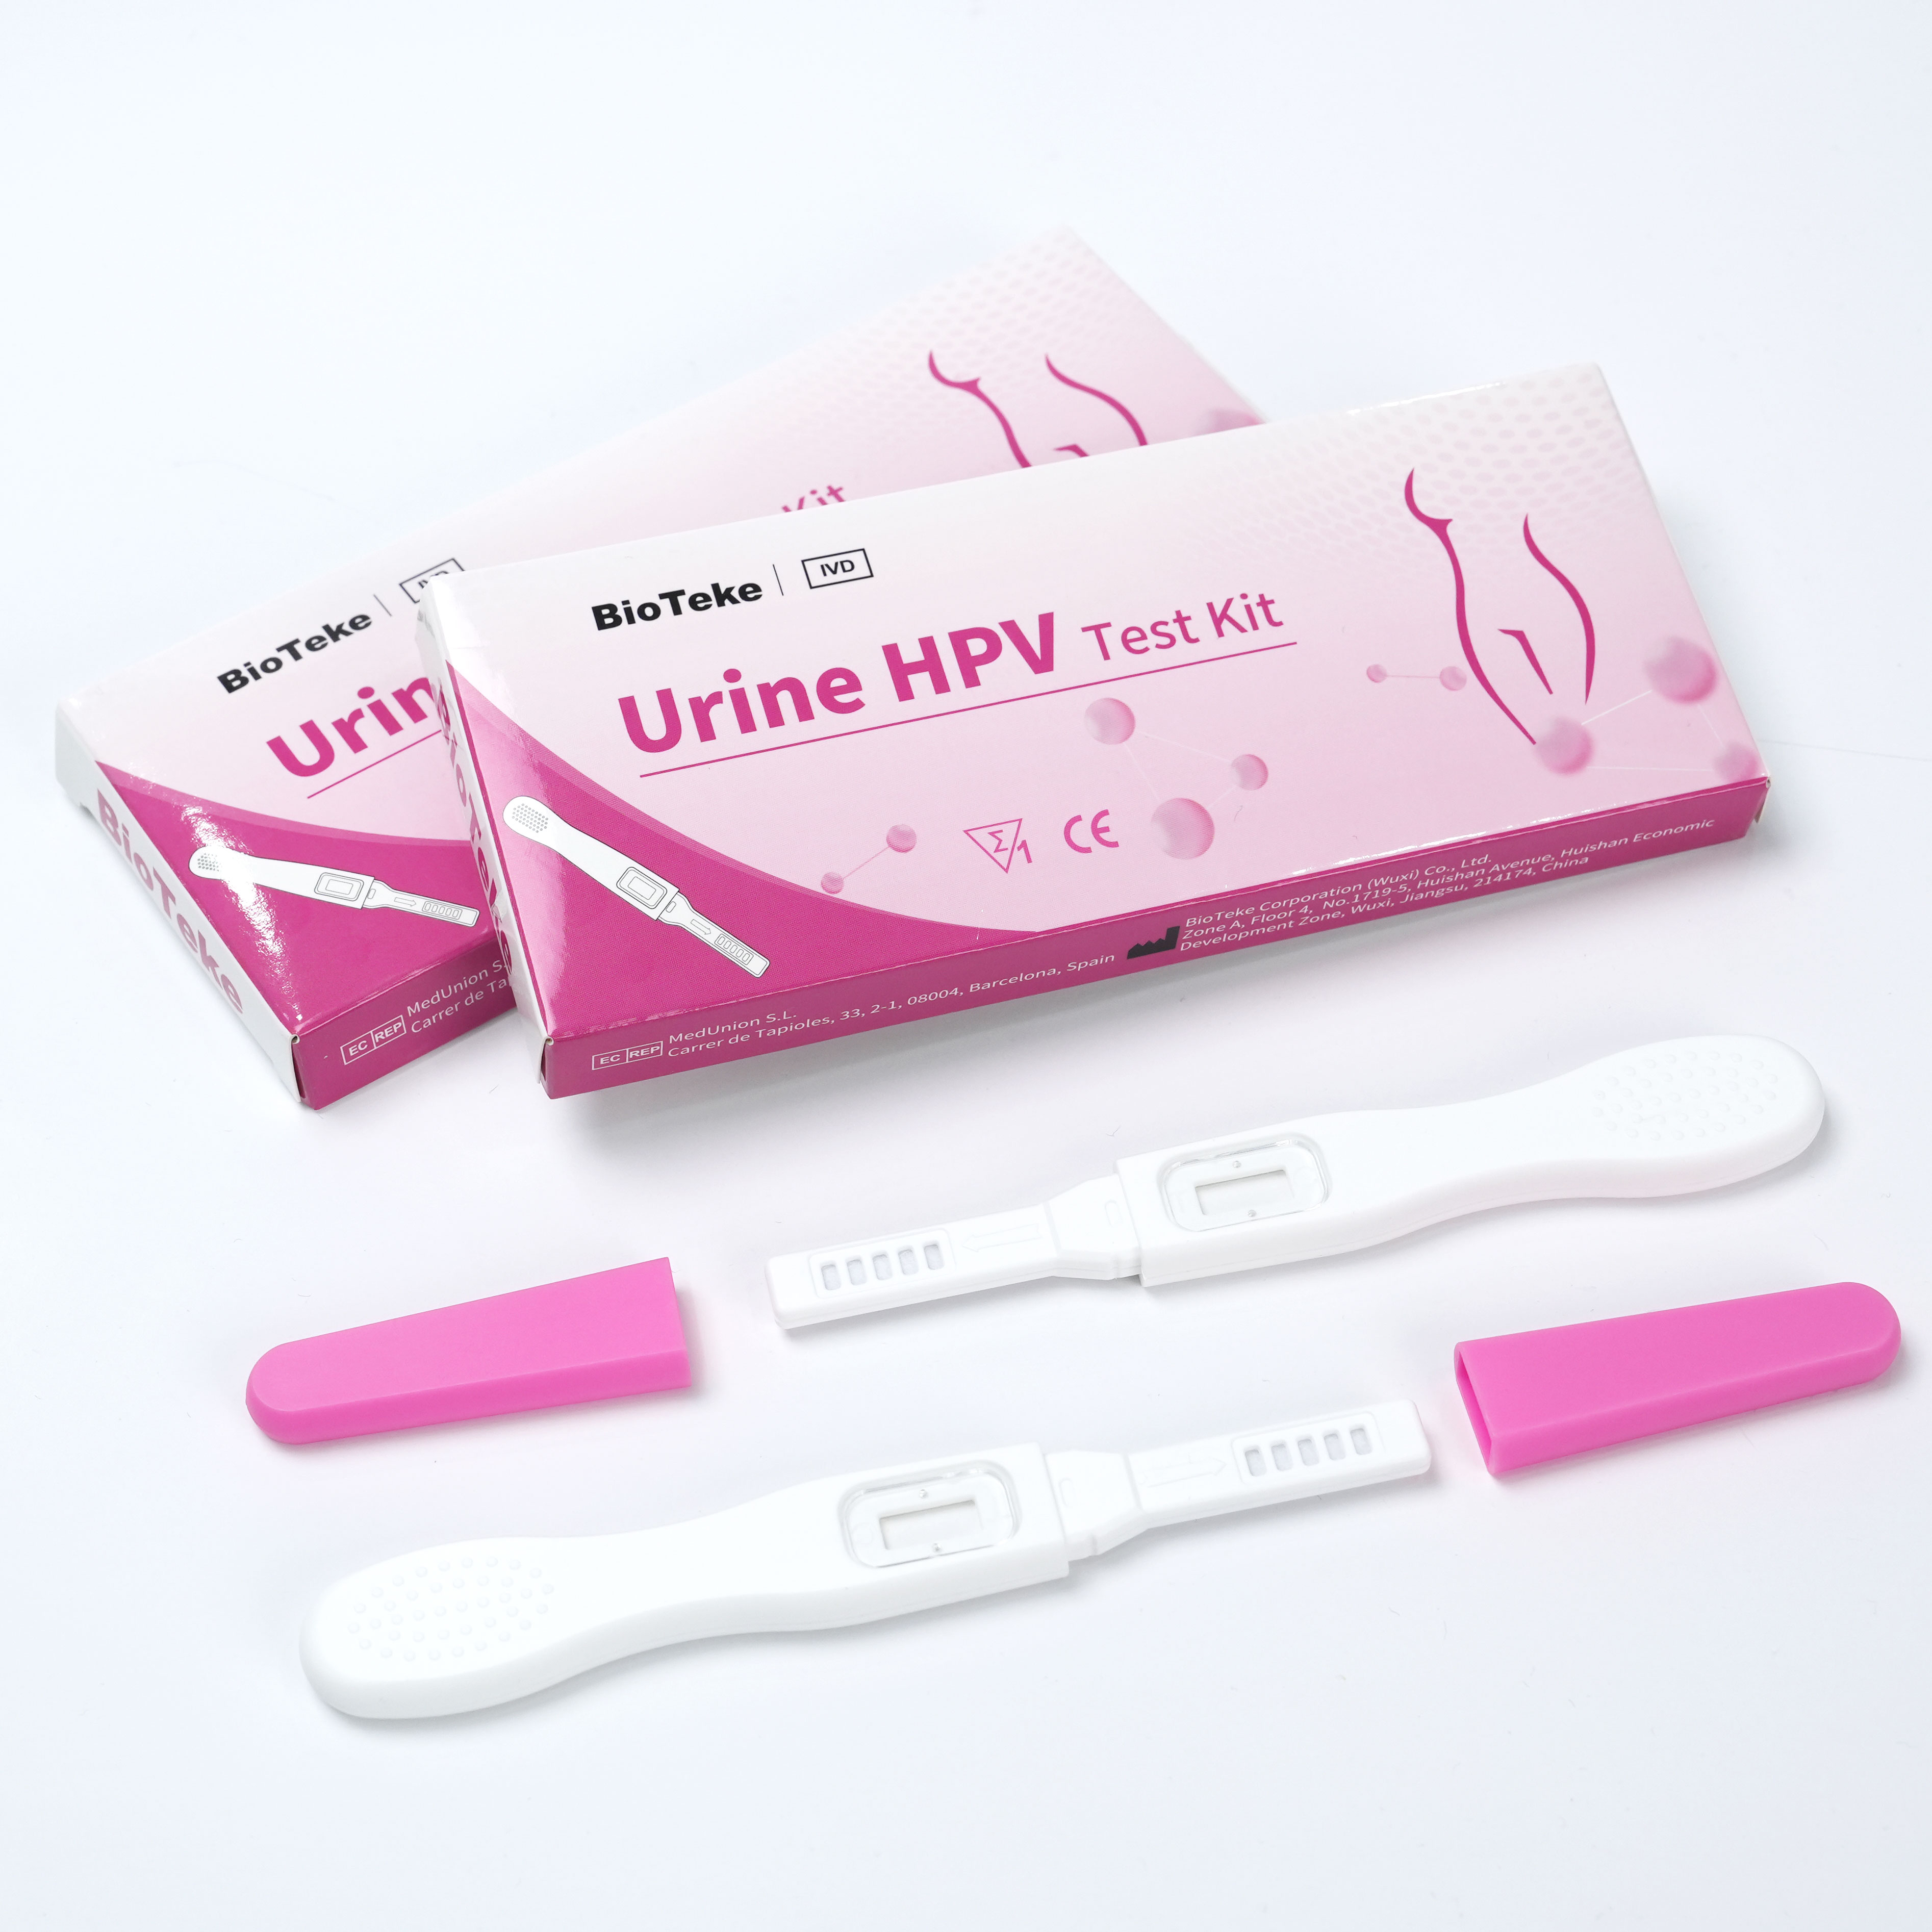 Urine HPV Test Kit